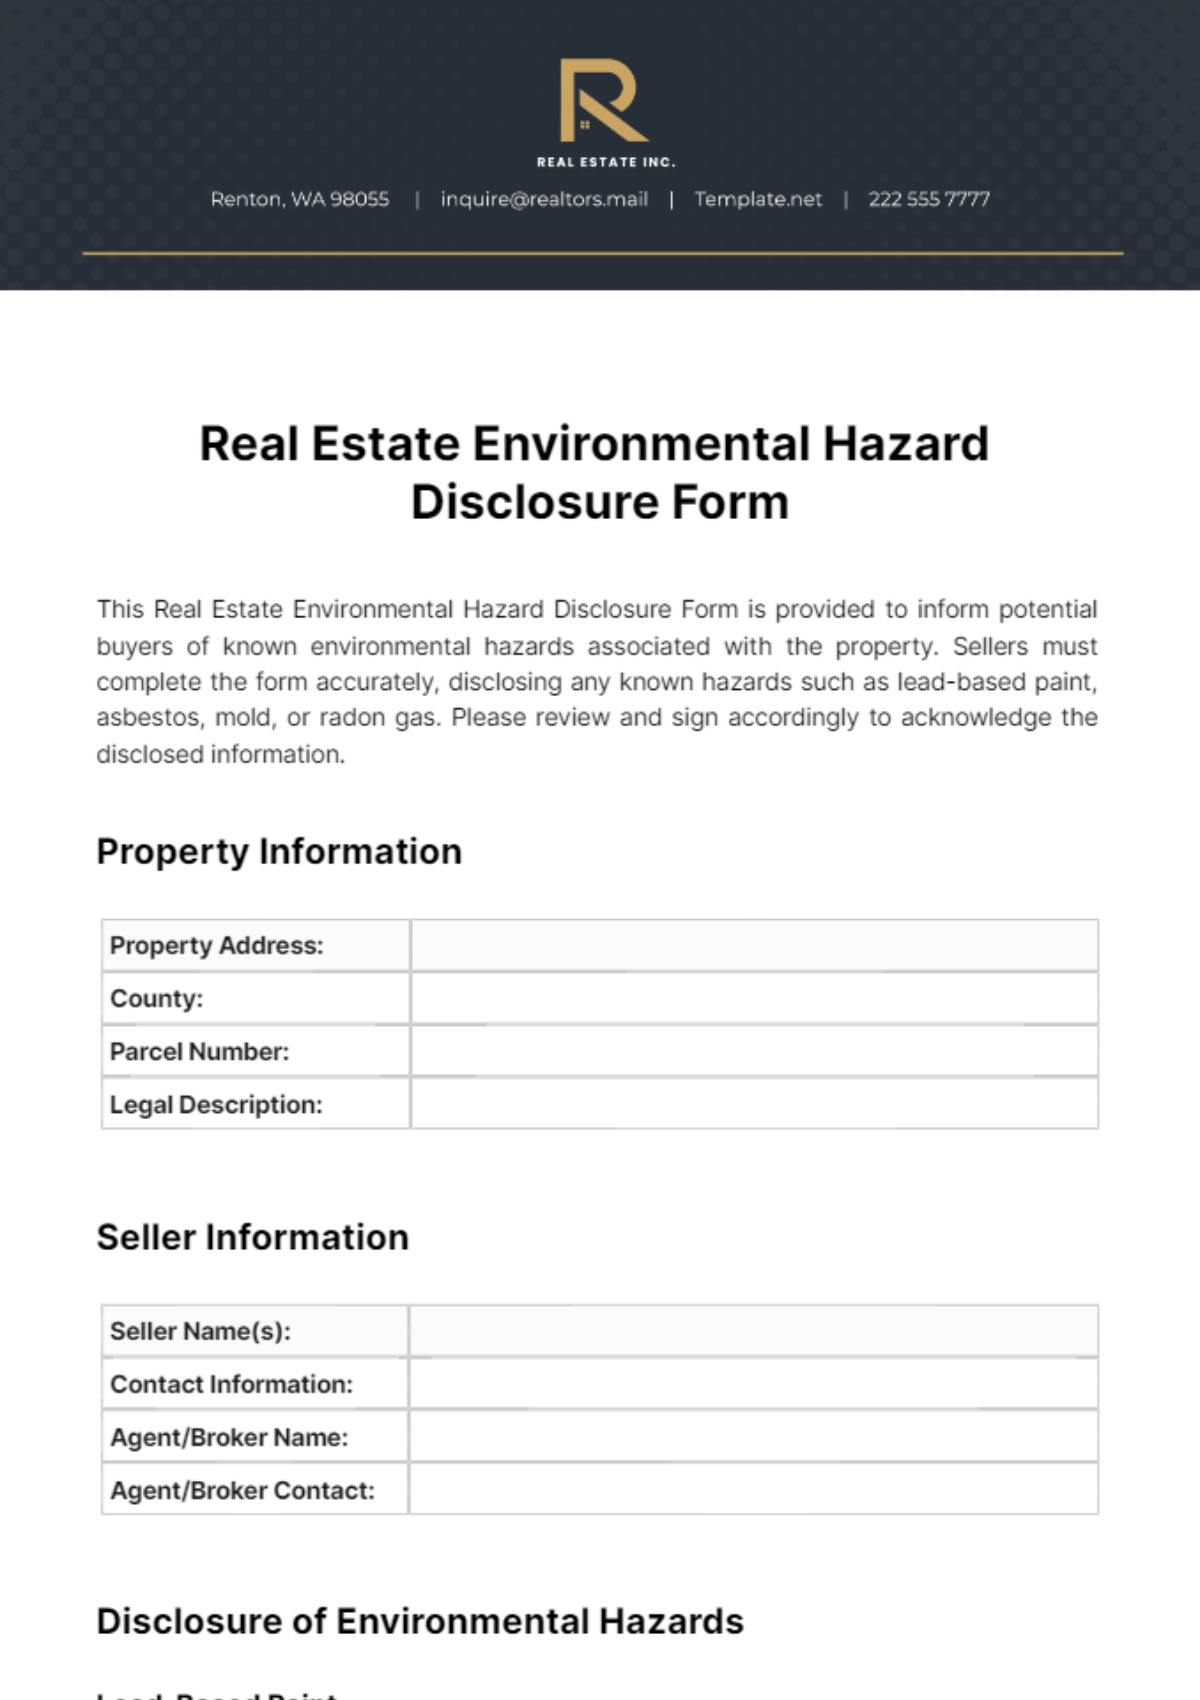 Real Estate Environmental Hazard Disclosure Form Template